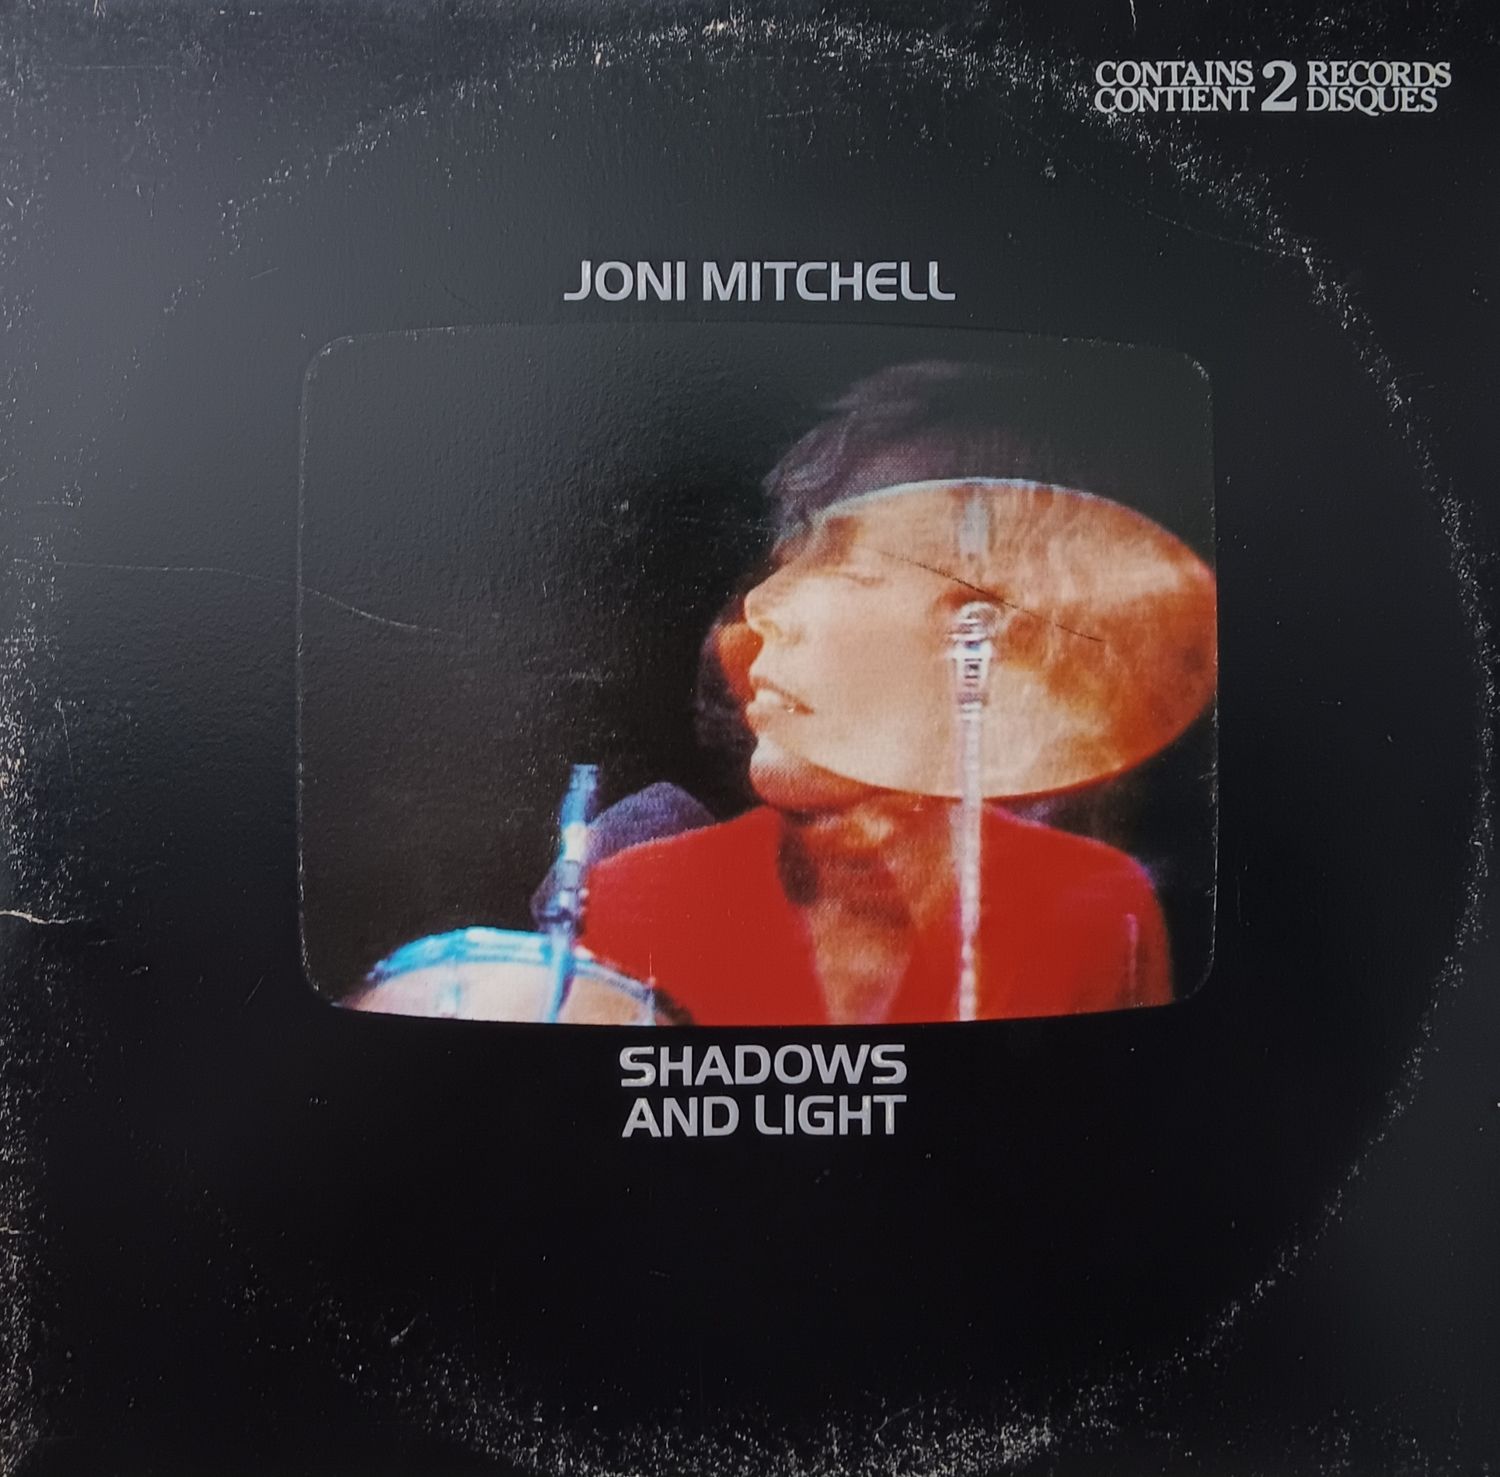 JONI MITCHELL - Shadows and light